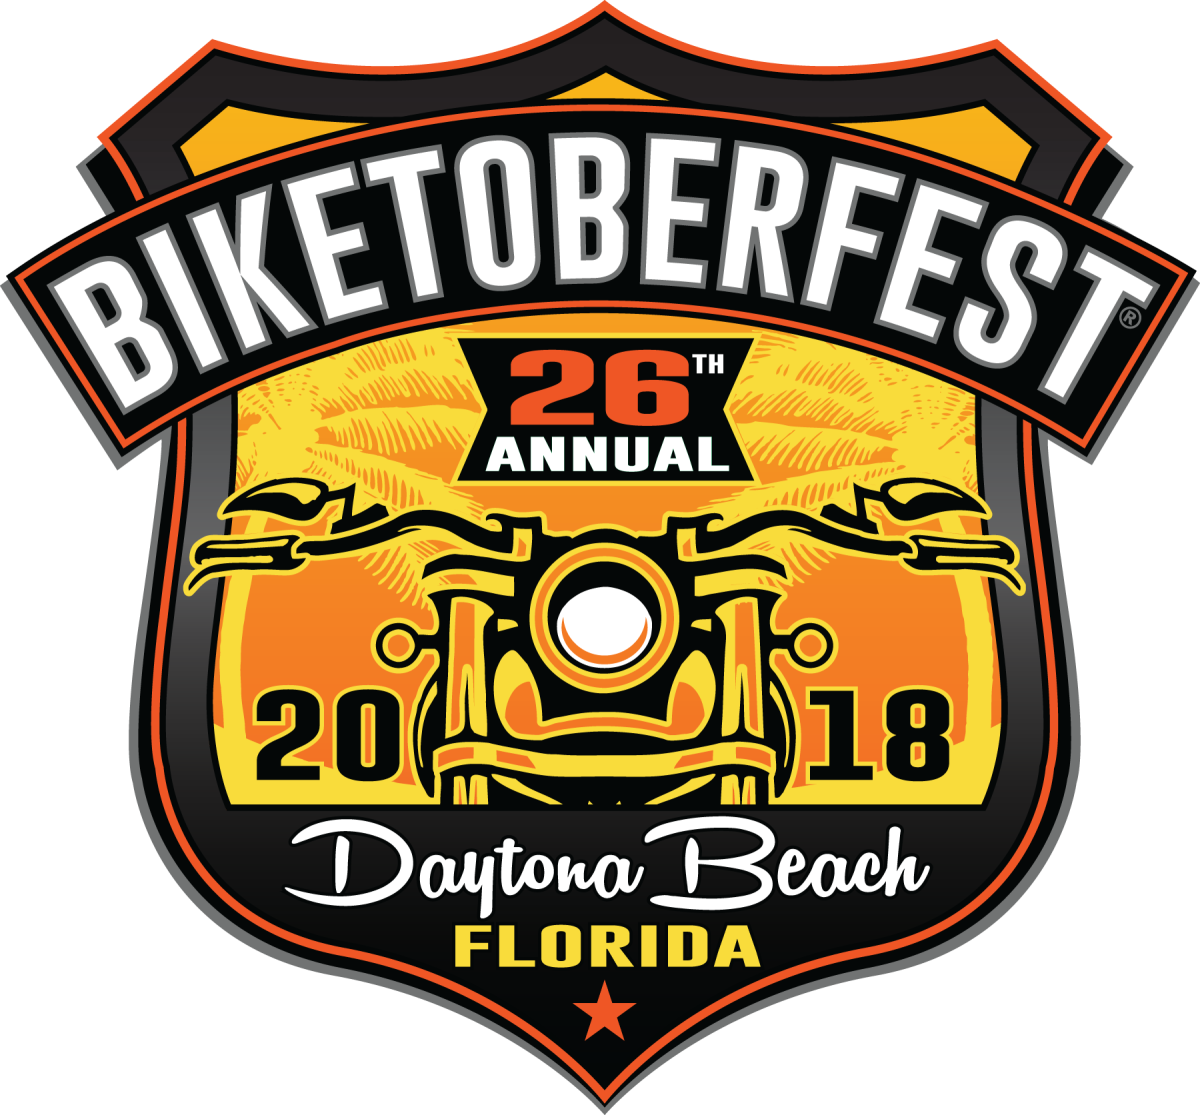 Biketoberfest® Daytona Beach, FL